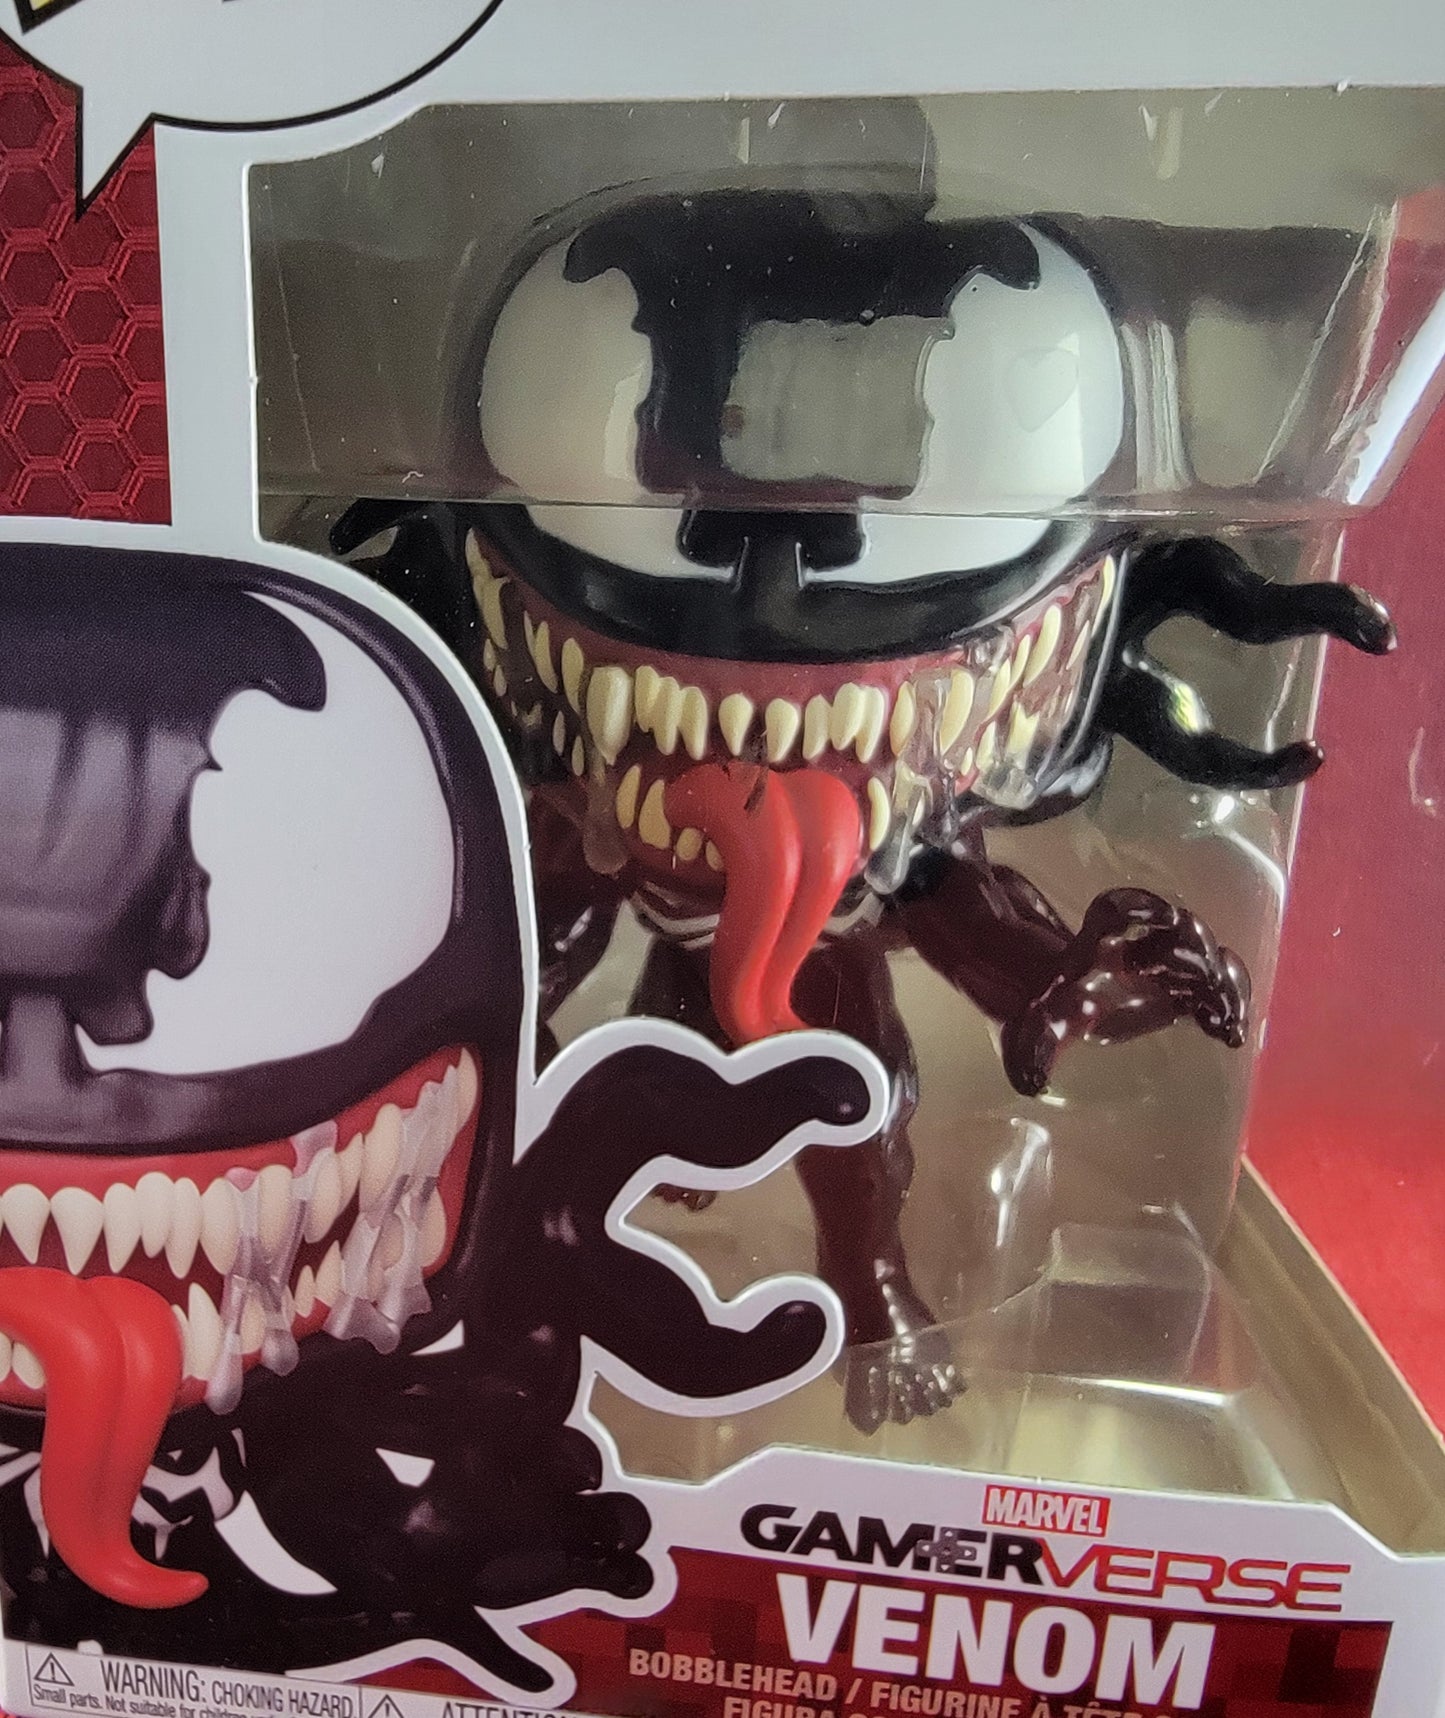 Venom spider-man 2 funko # 972 (nib)
With pop protector